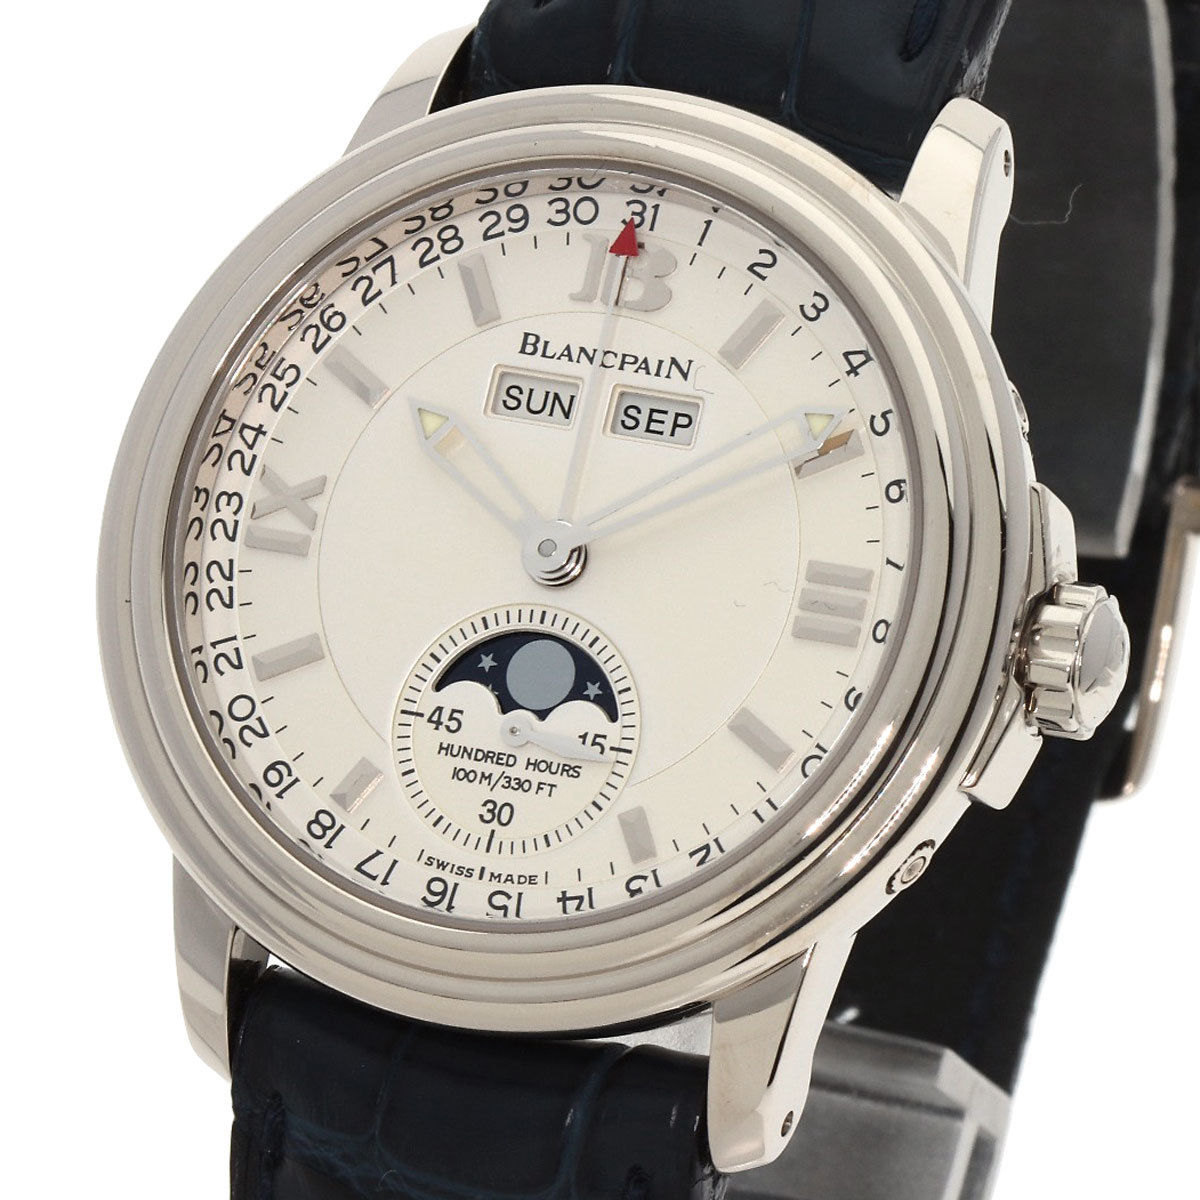 Blancpain Blancpain 3536.1542A.53re man Triple календарь производитель Complete наручные часы K18 белое золото кожа мужской б/у 